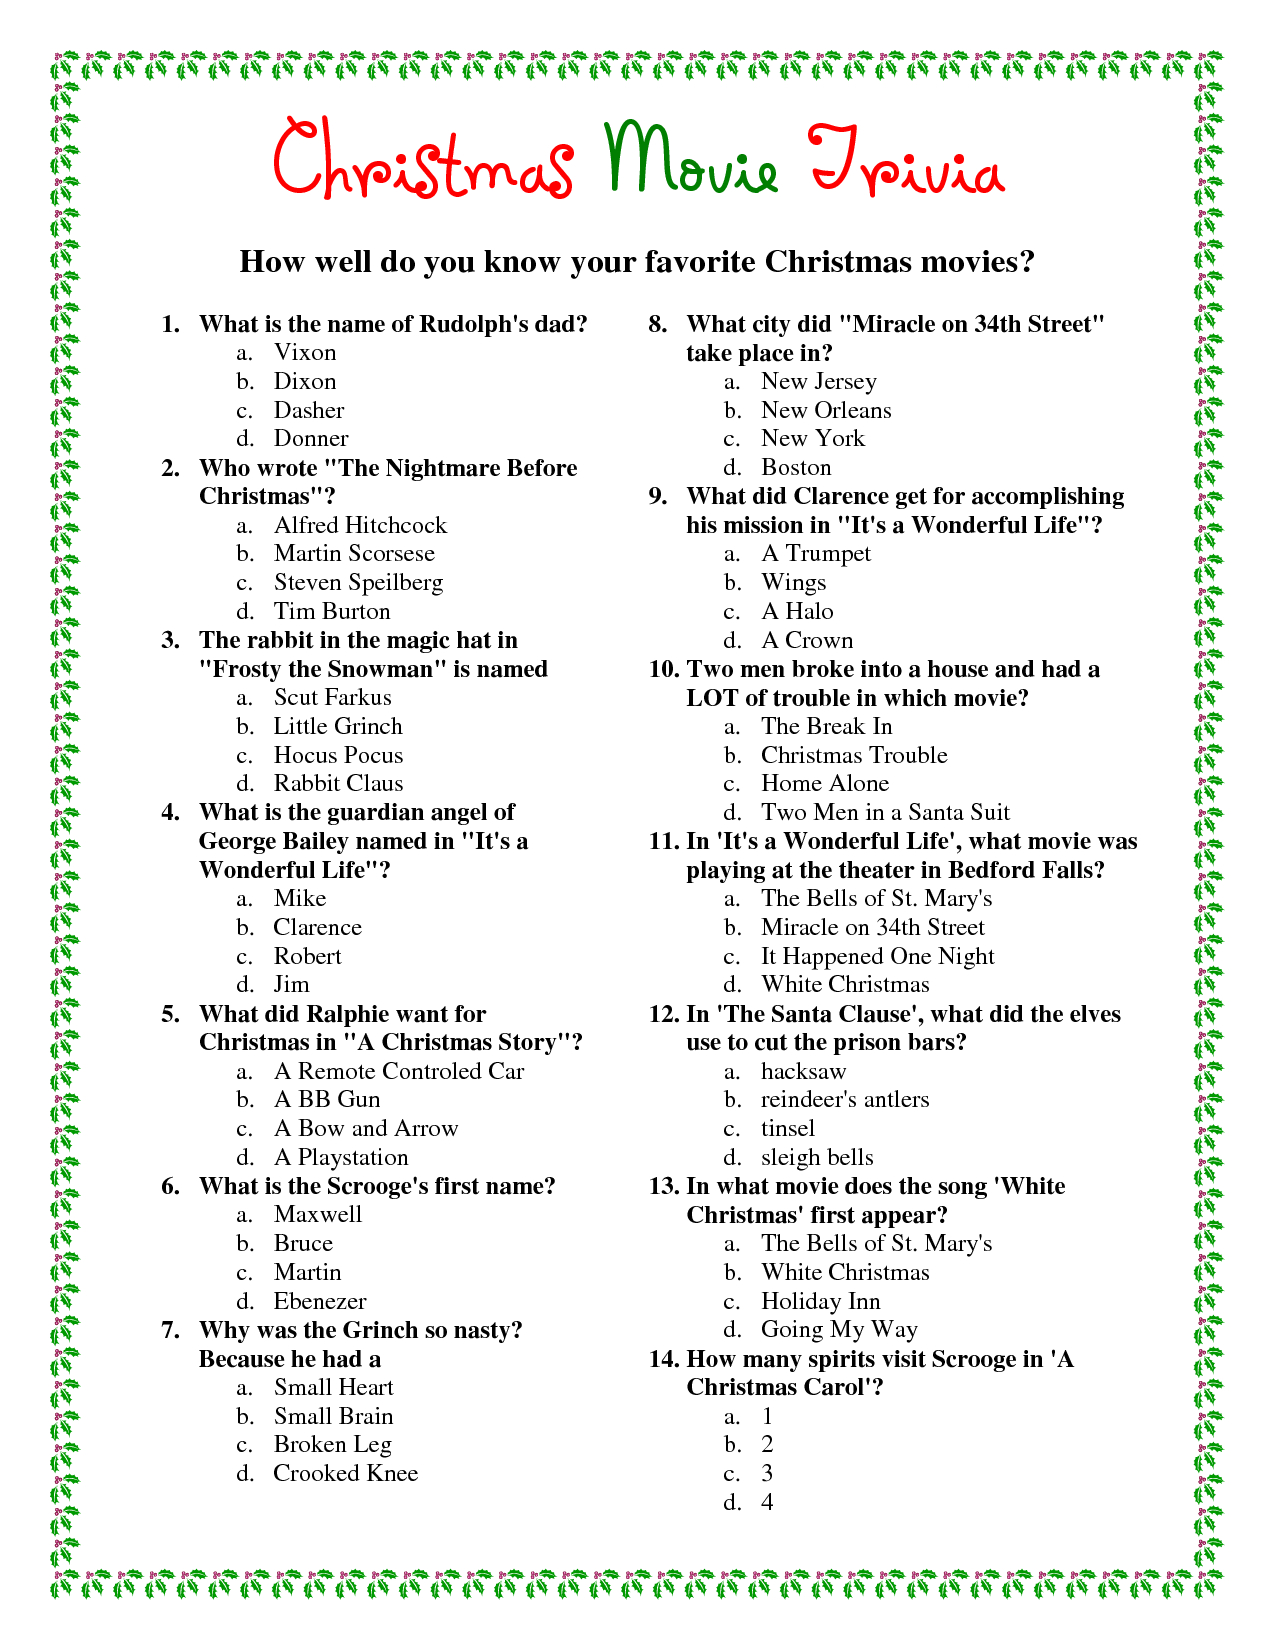 Printable Christmas Movie Trivia.pdf Download Legal Documents - Free Printable Christmas Trivia Quiz